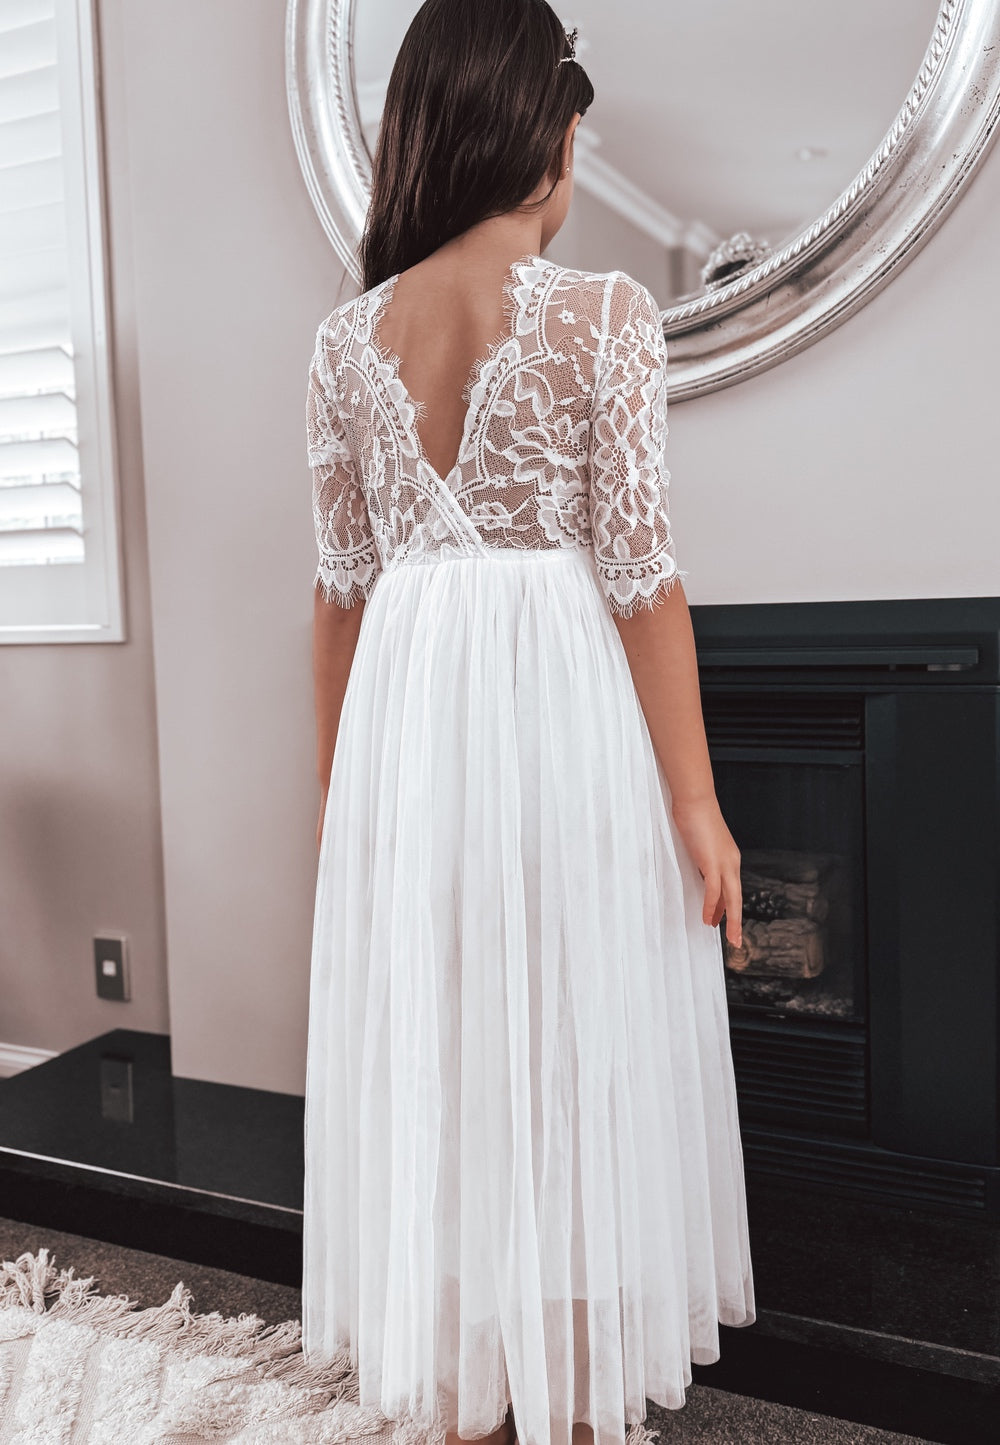 Maia White Lace Dress - Girls White Dresses